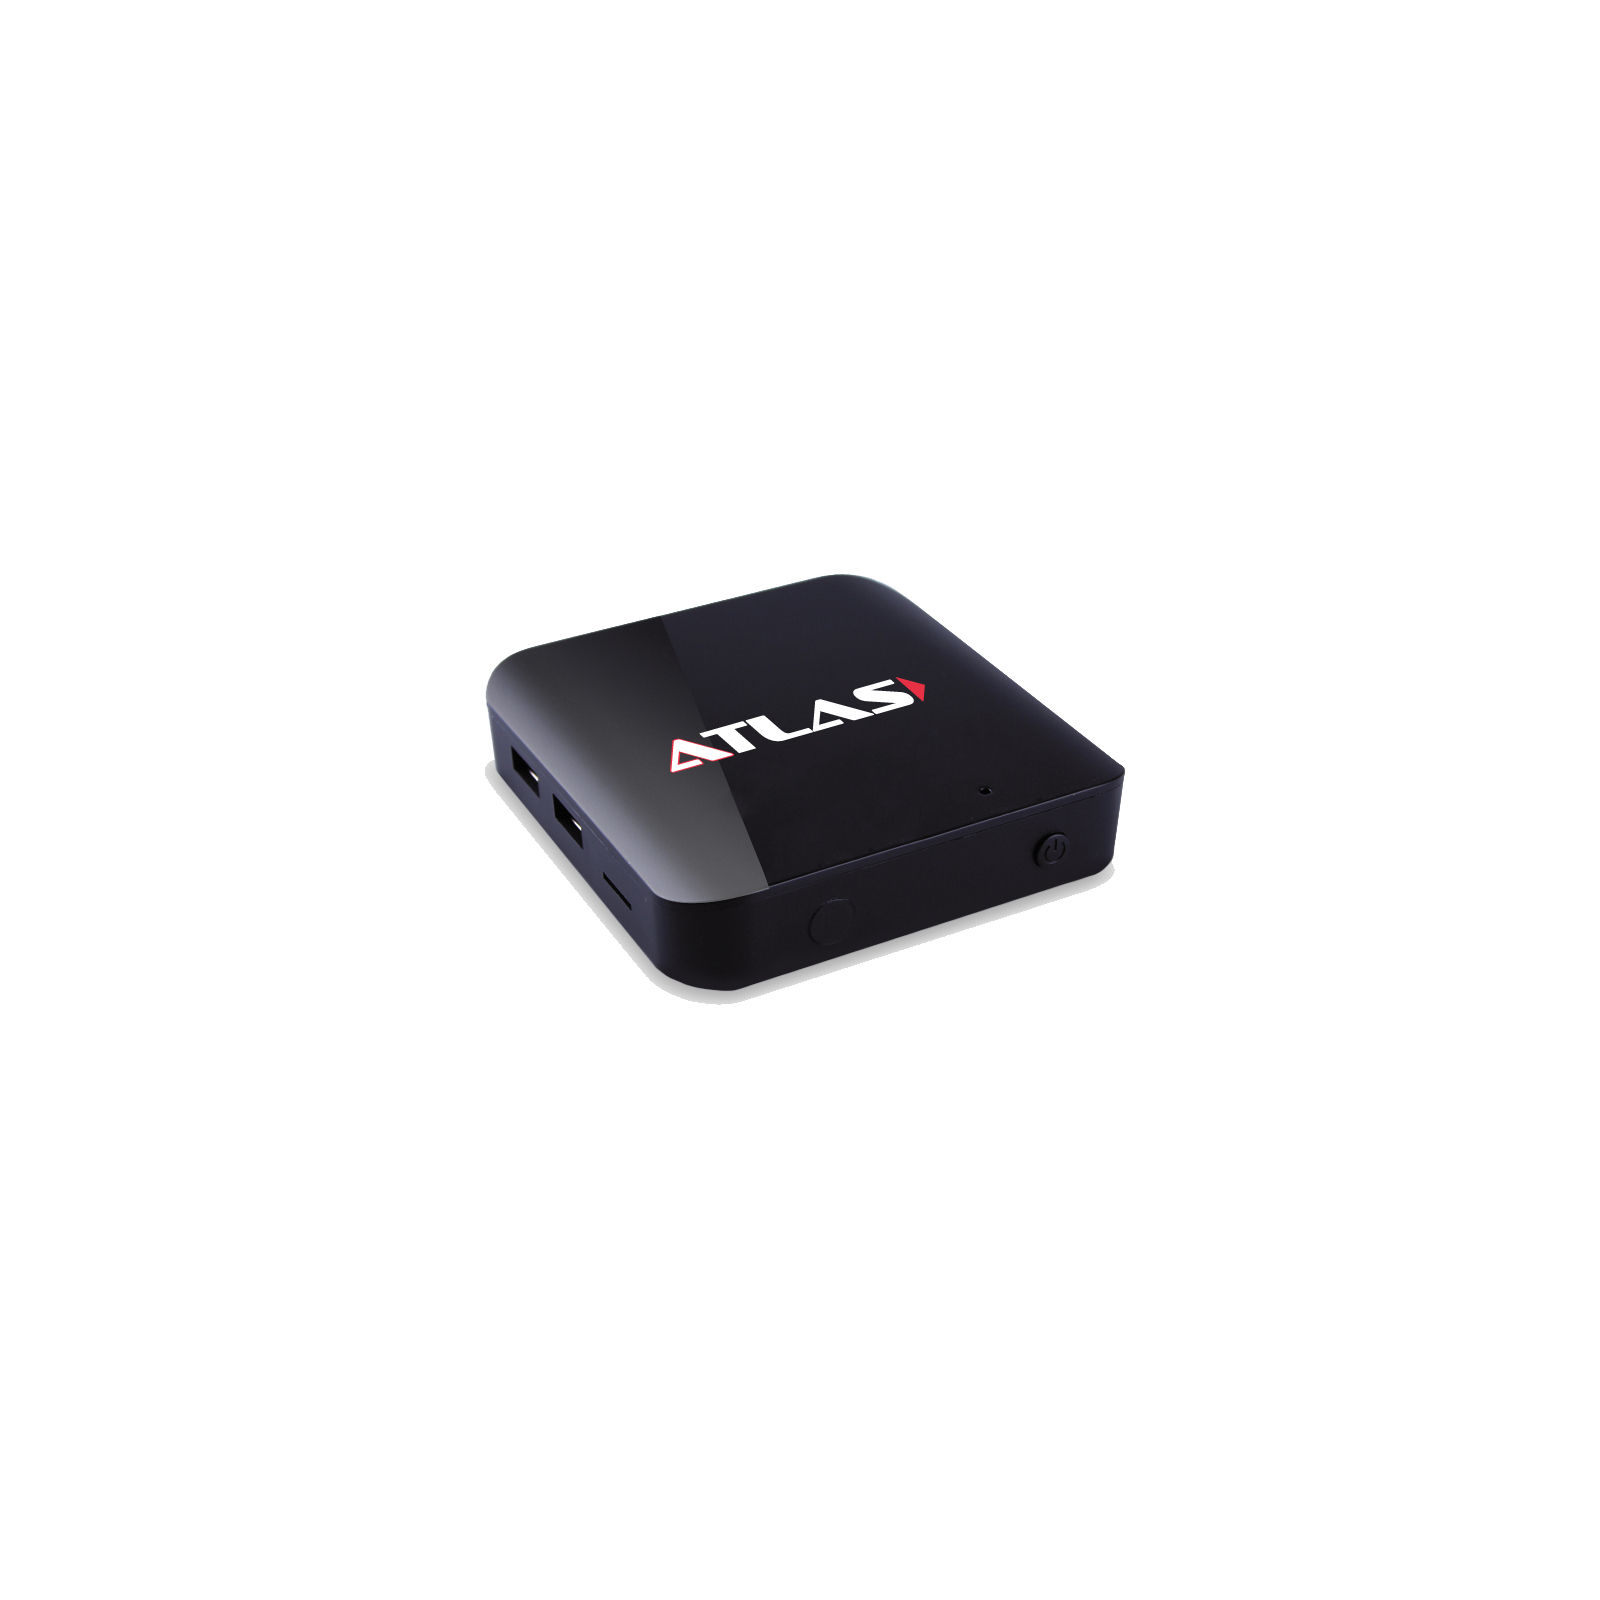 Медиаплеер Atlas Android TV BOX